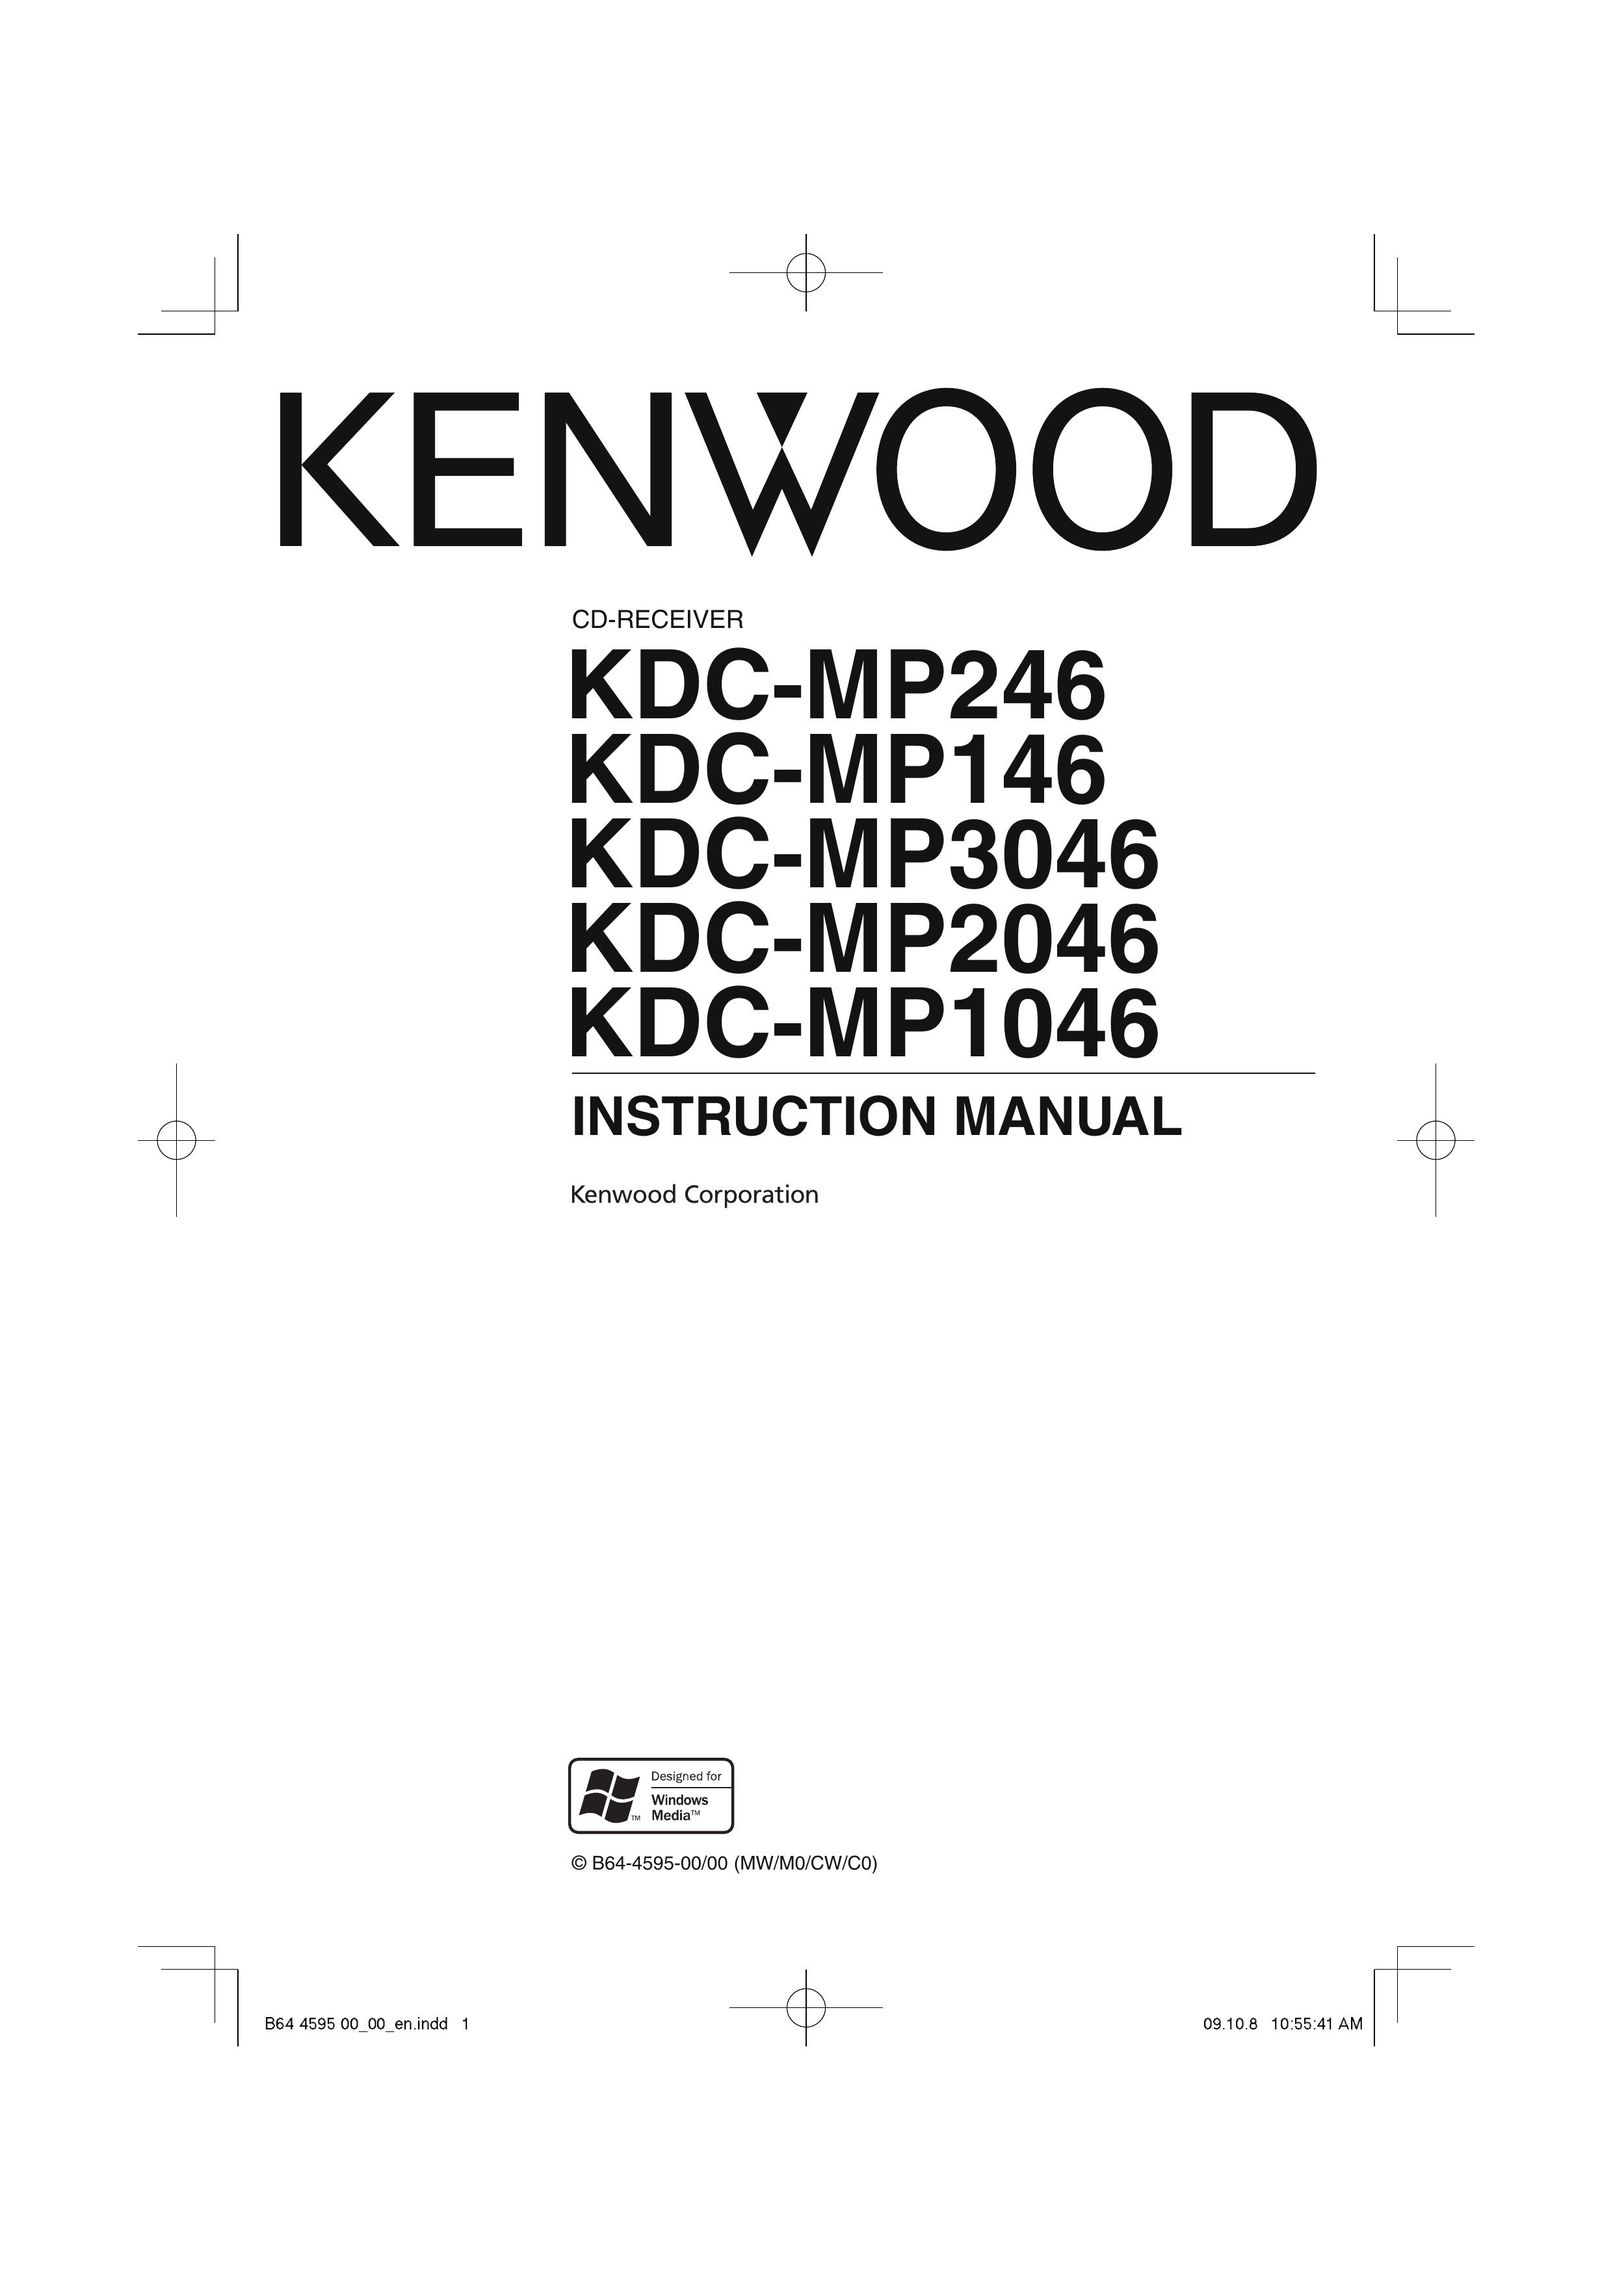 Kenwood KDC-MP246 Car Amplifier User Manual